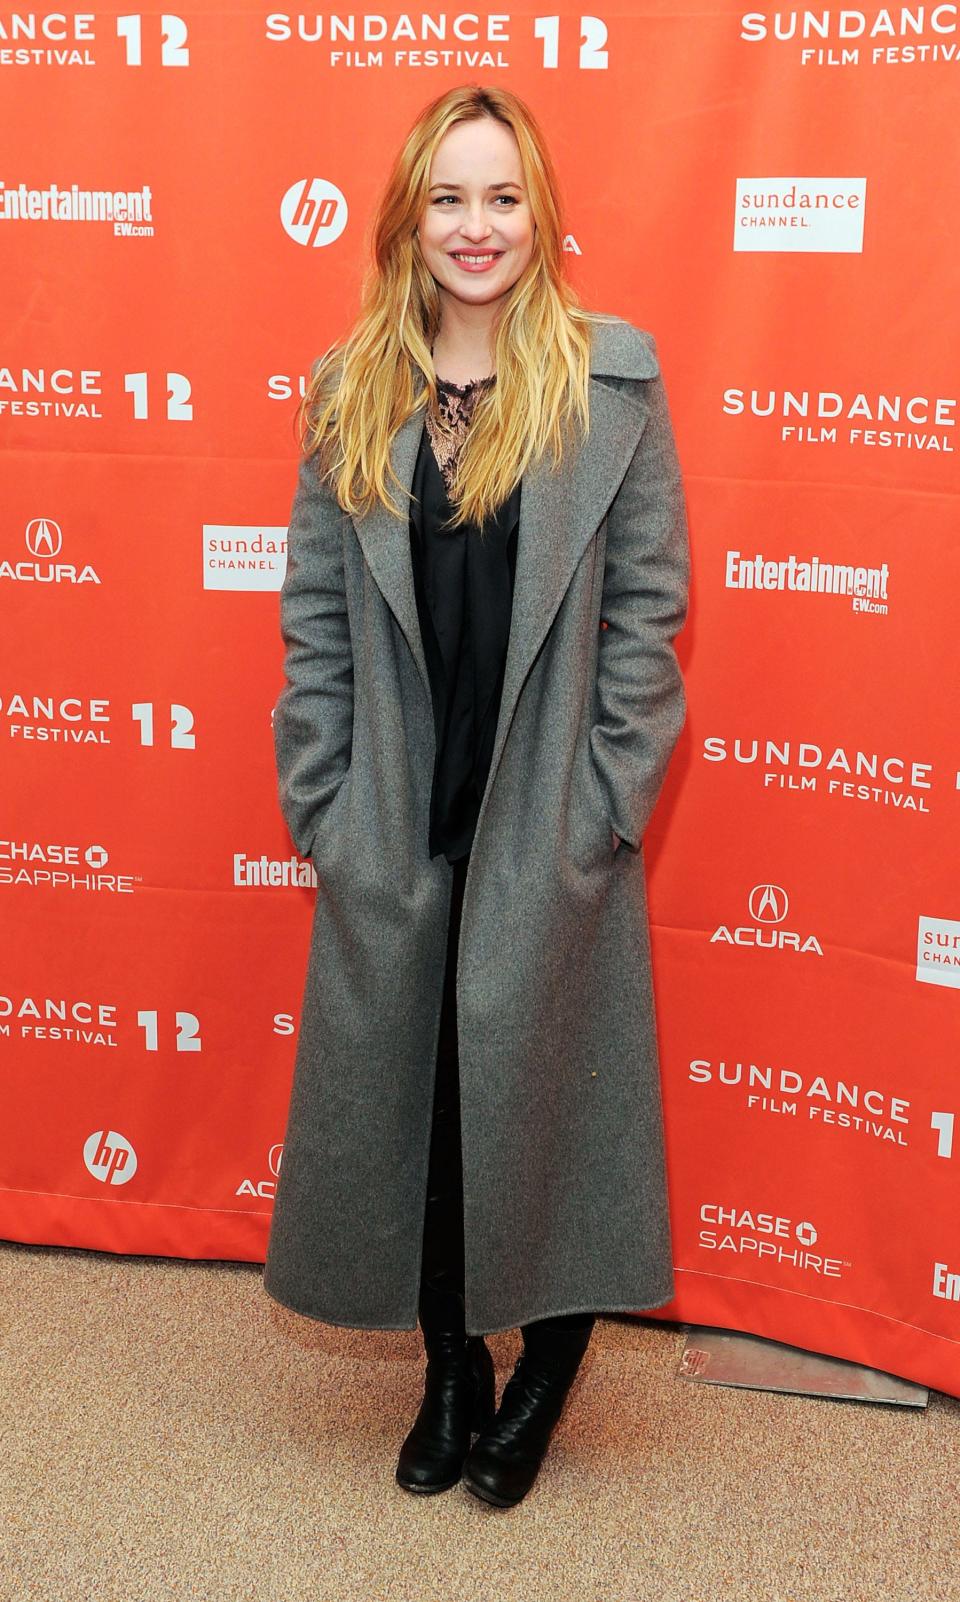 Dakota Johnson at Sundance Film Festival, January 2012